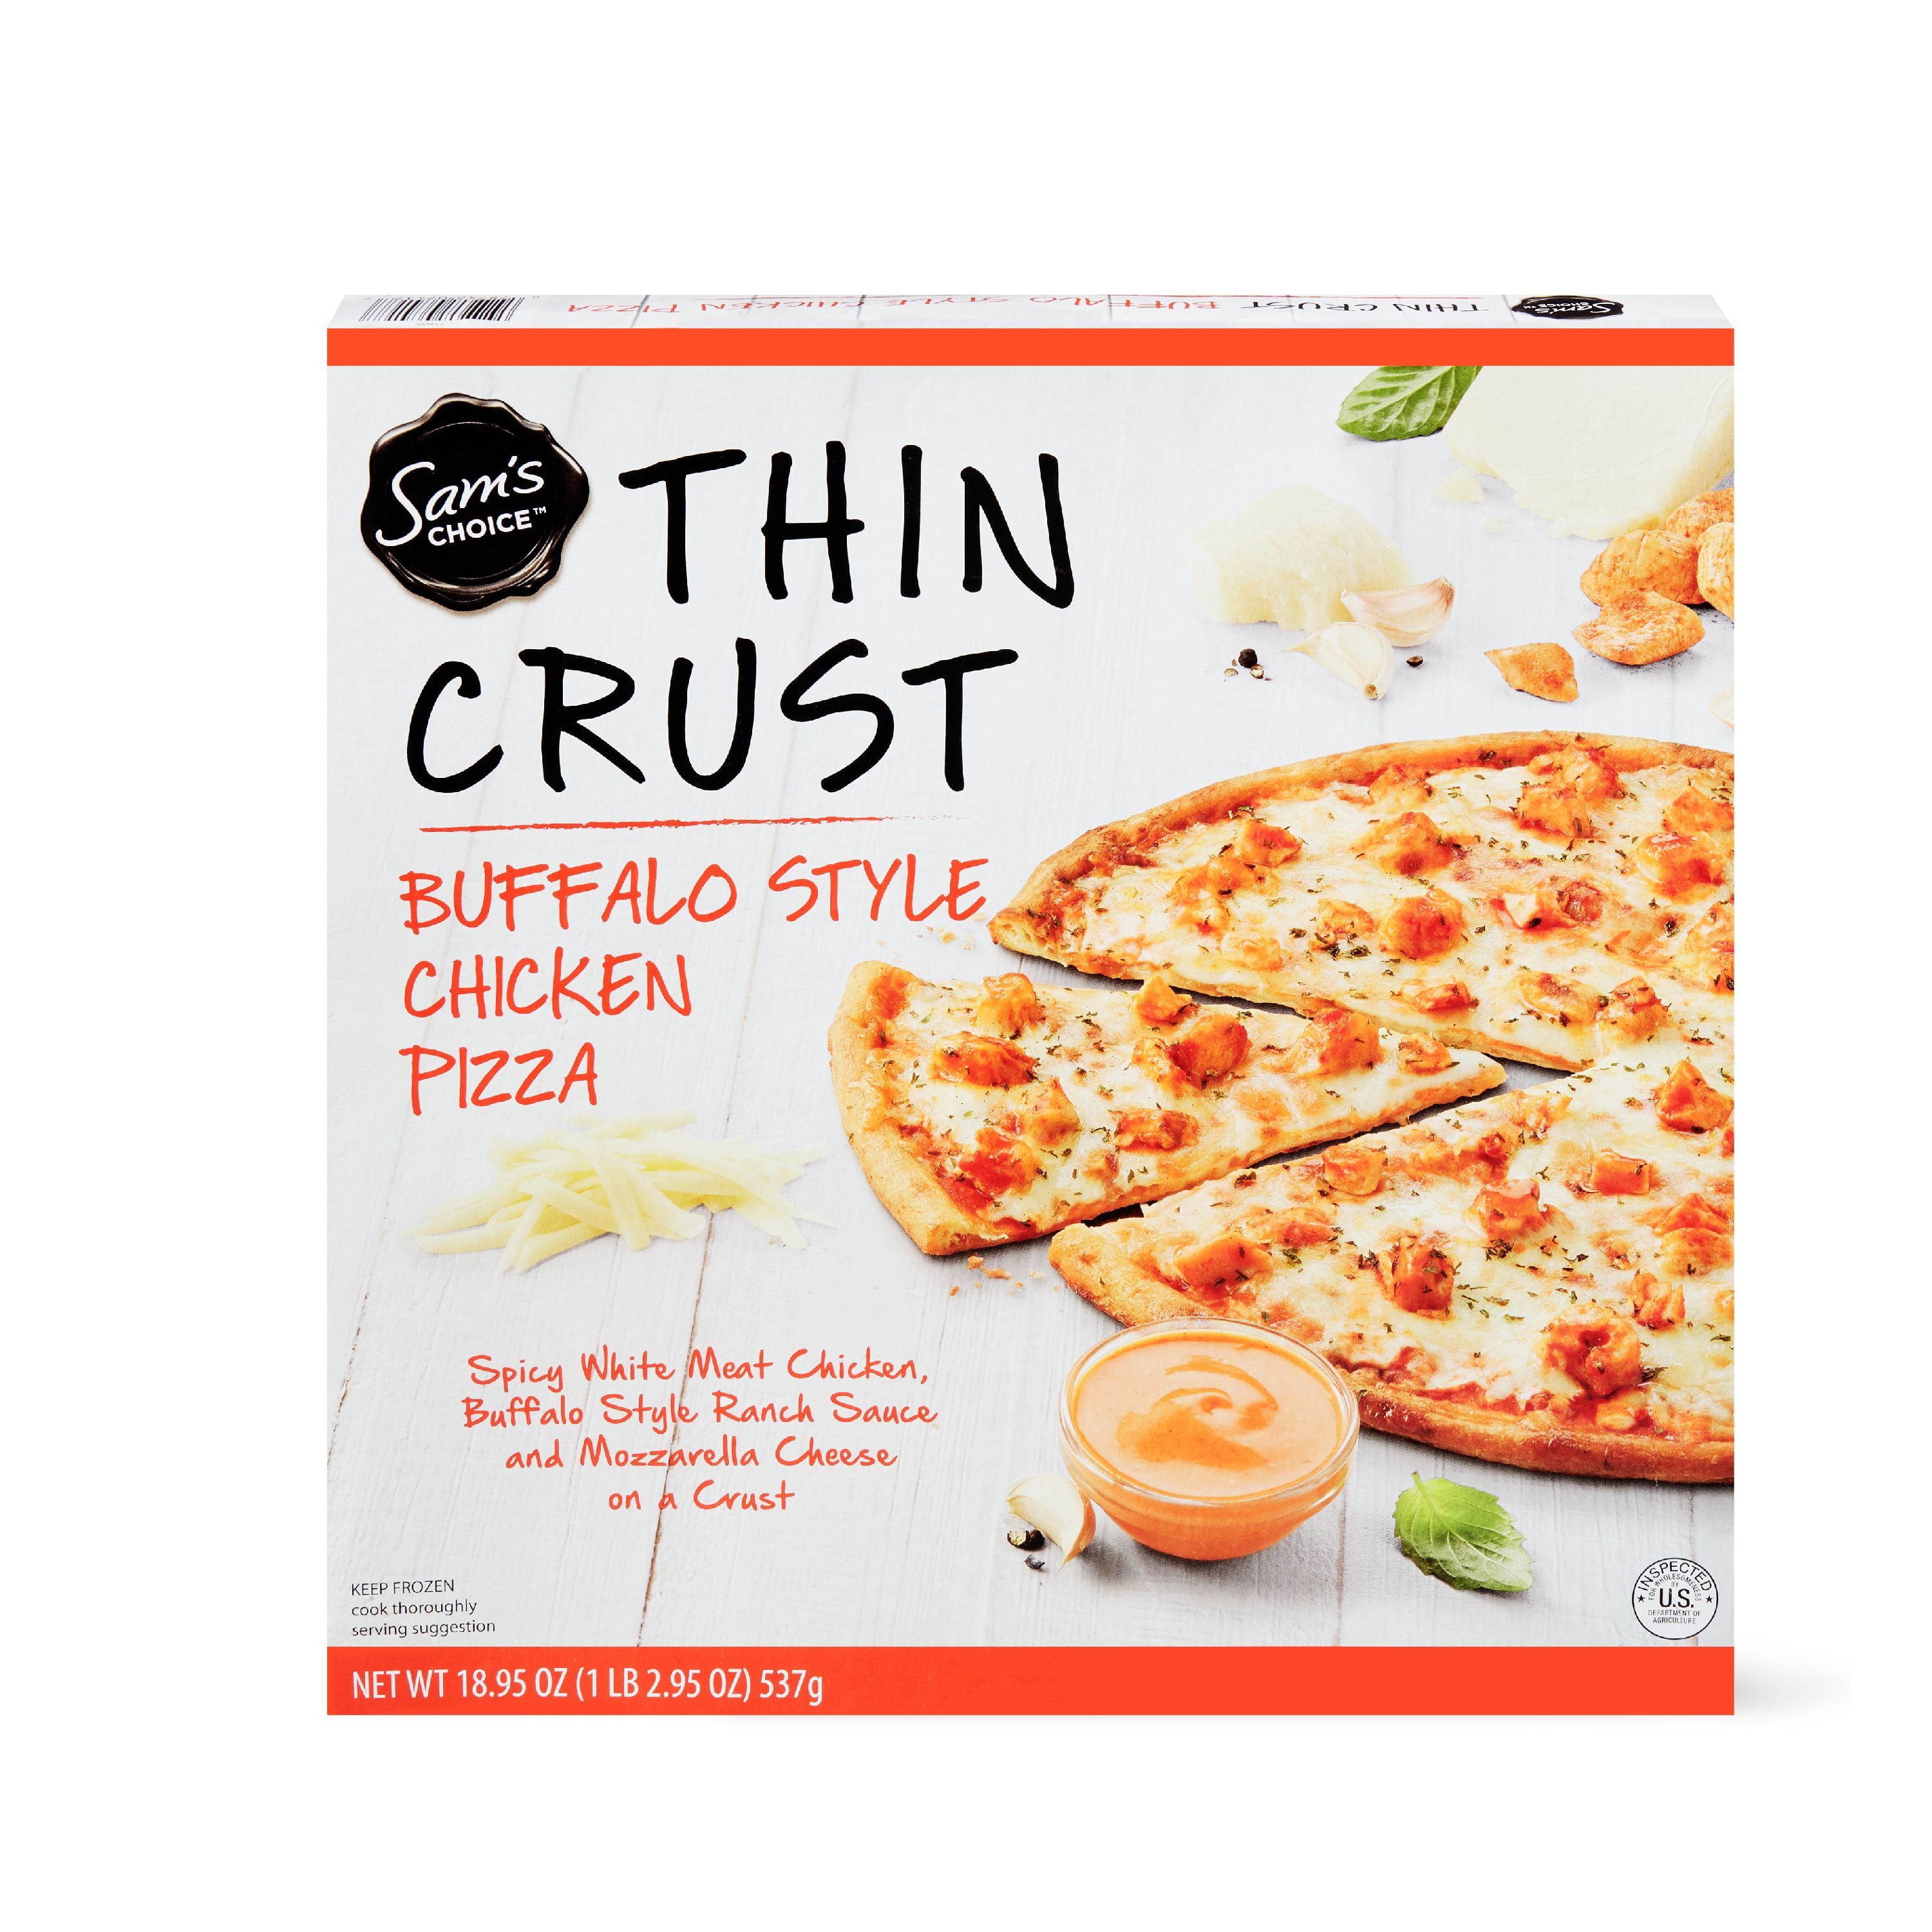 Sam S Choice Thin Crust Buffalo Style Chicken Pizza 18 95 Oz Walmart Com Walmart Com